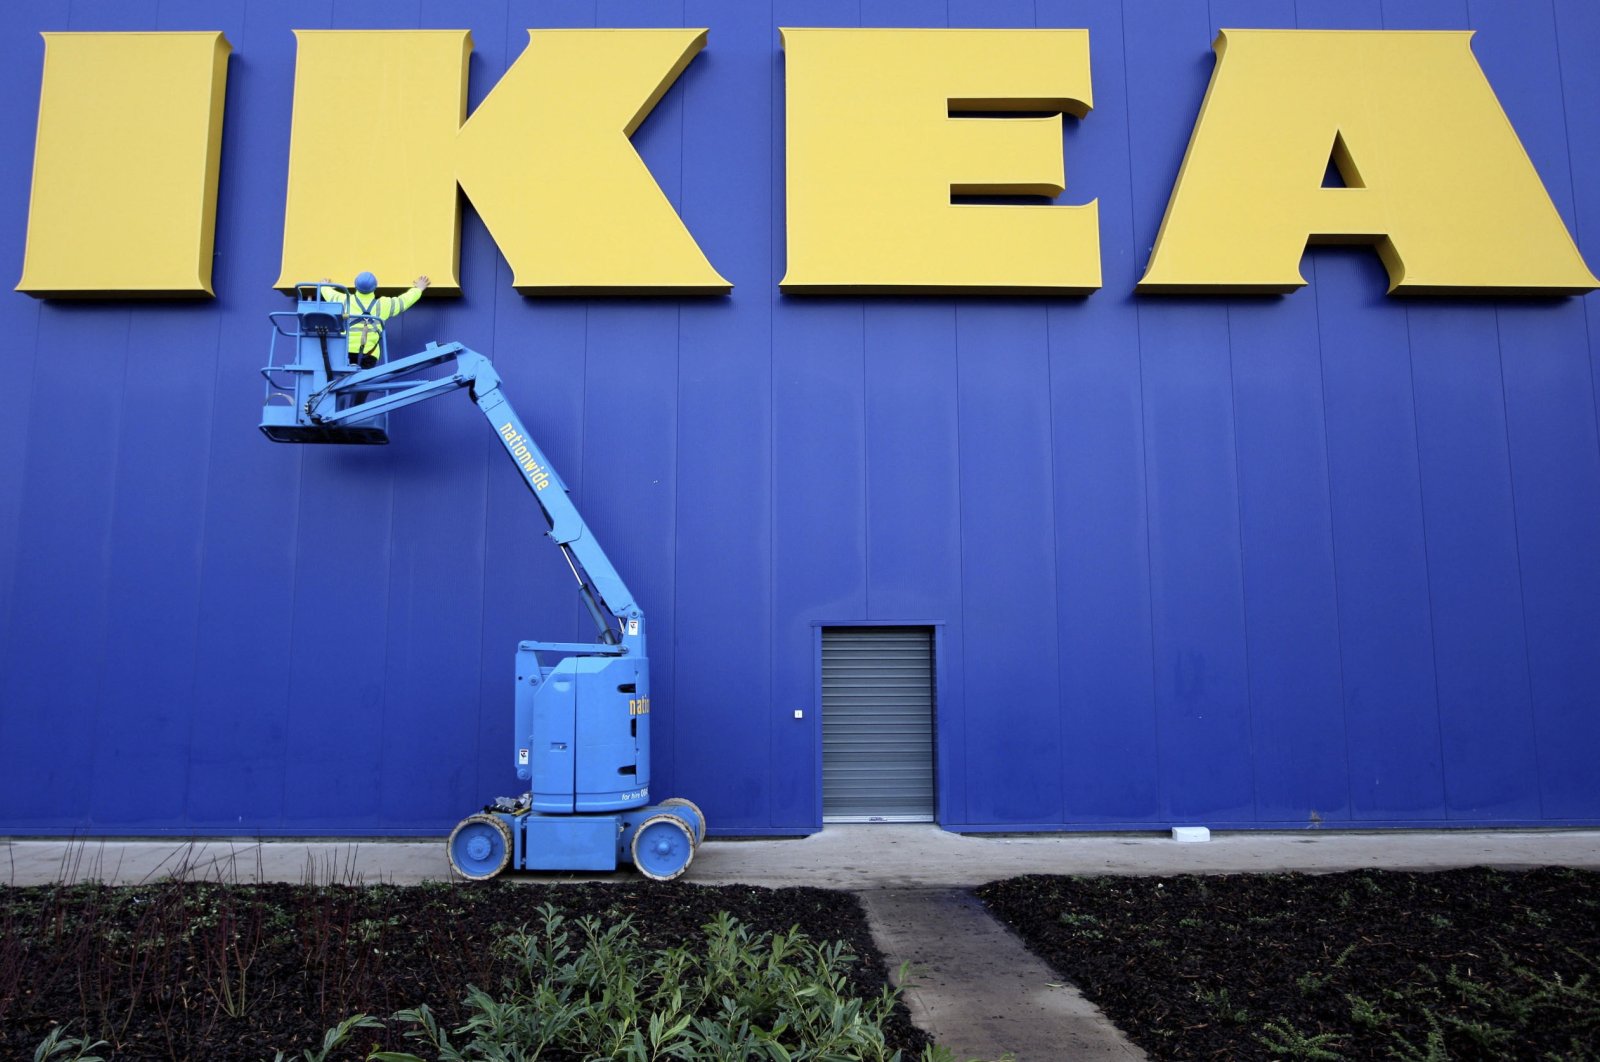 Site Foreman David Smyth at work on the New IKEA store in Belfast, Northern Ireland, Dec. 11, 2007. (AP Photo)